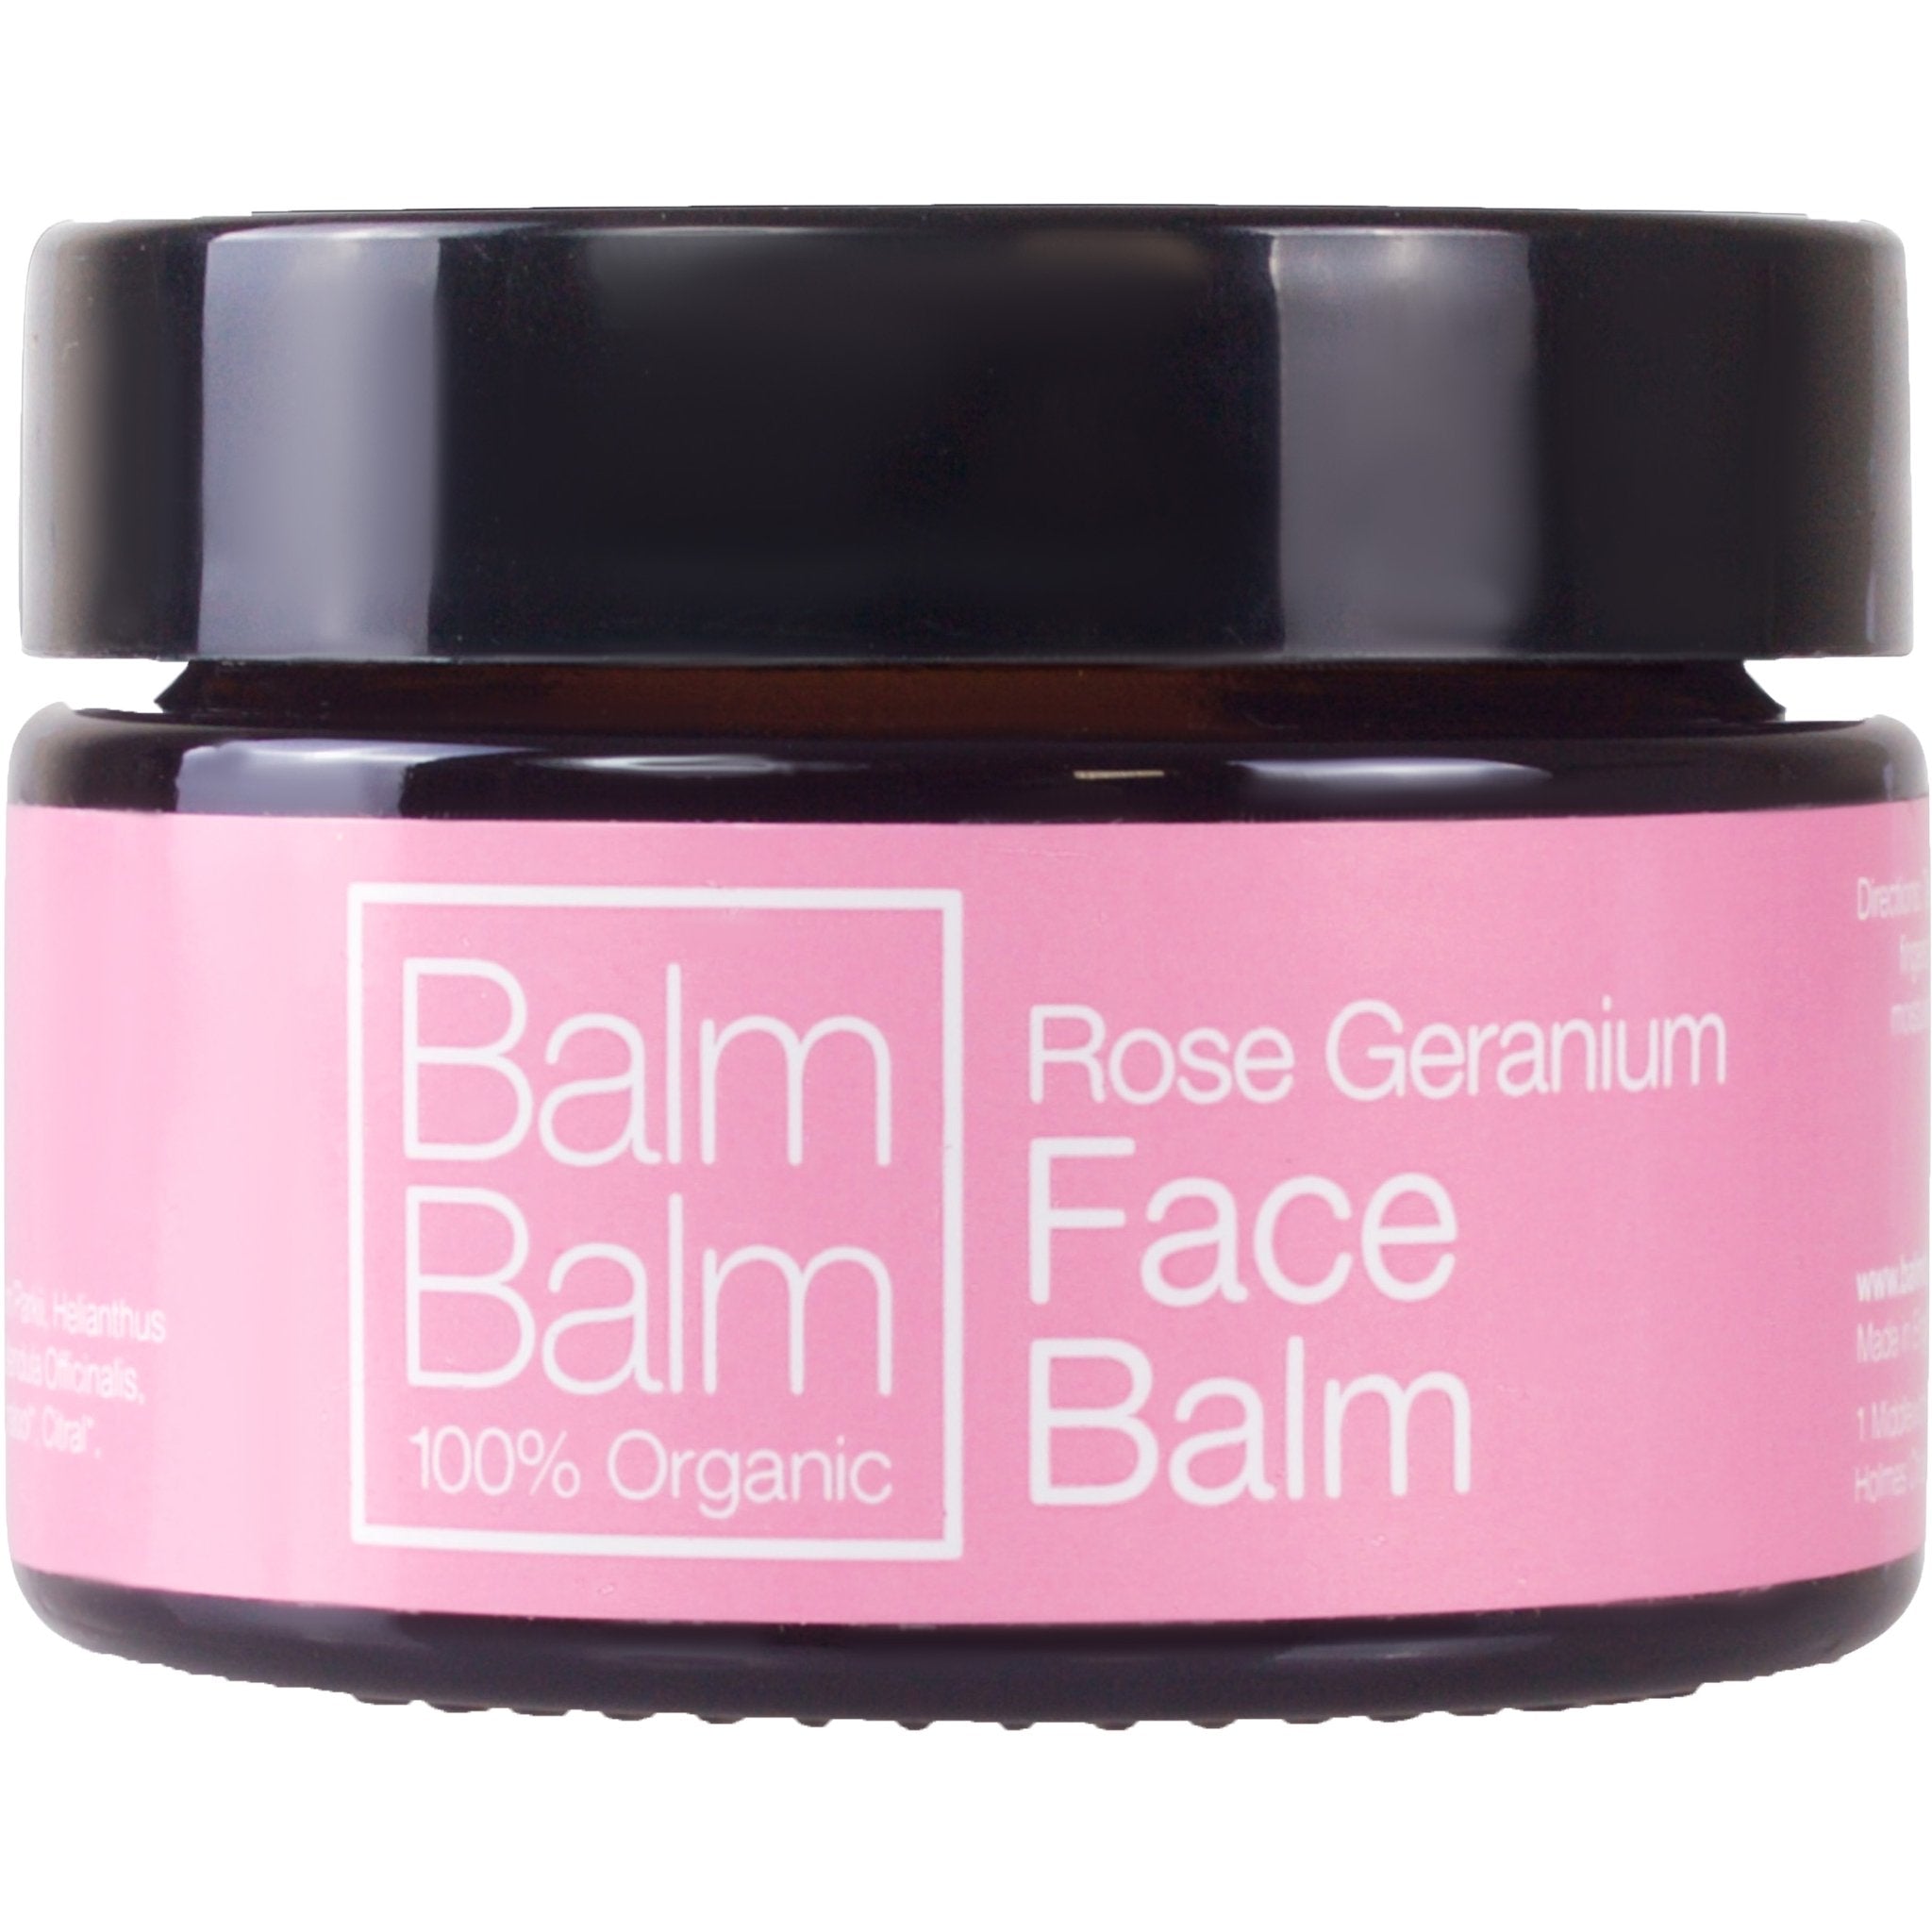 Rose Geranium Face Balm - mypure.co.uk